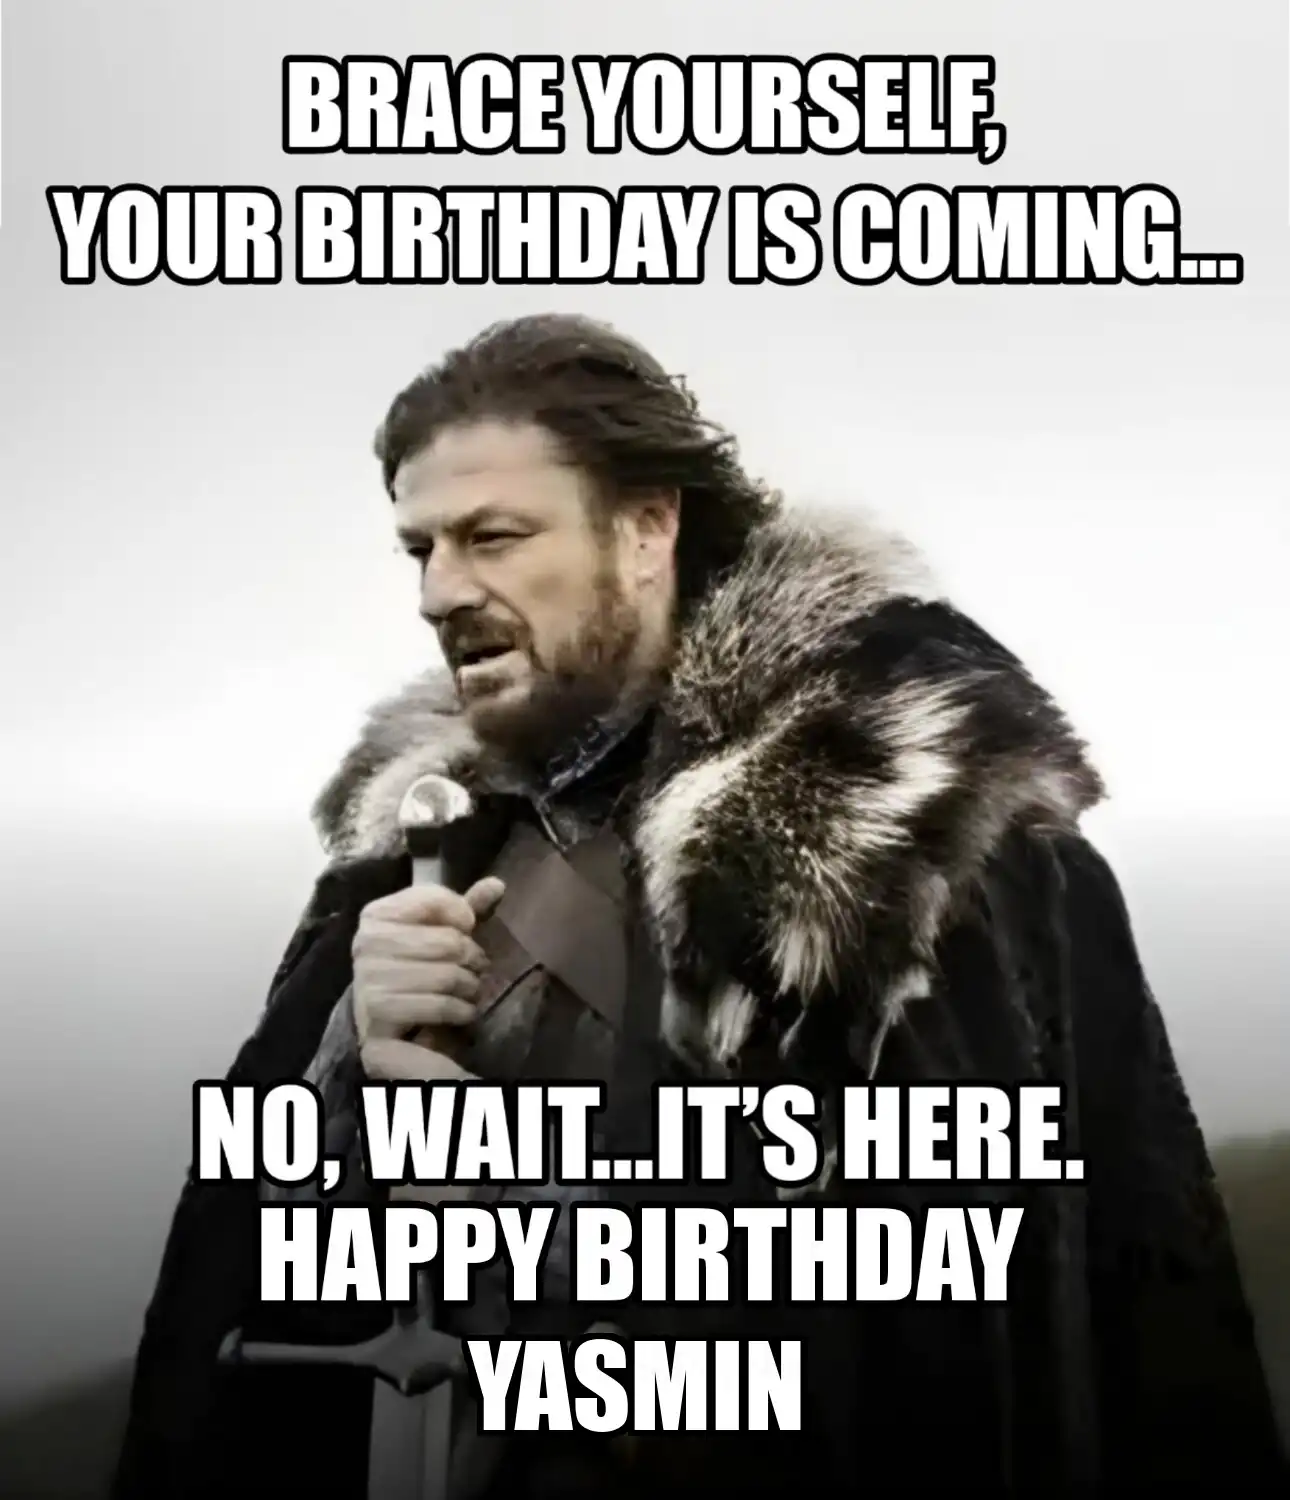 Happy Birthday Yasmin Brace Yourself Your Birthday Is Coming Meme